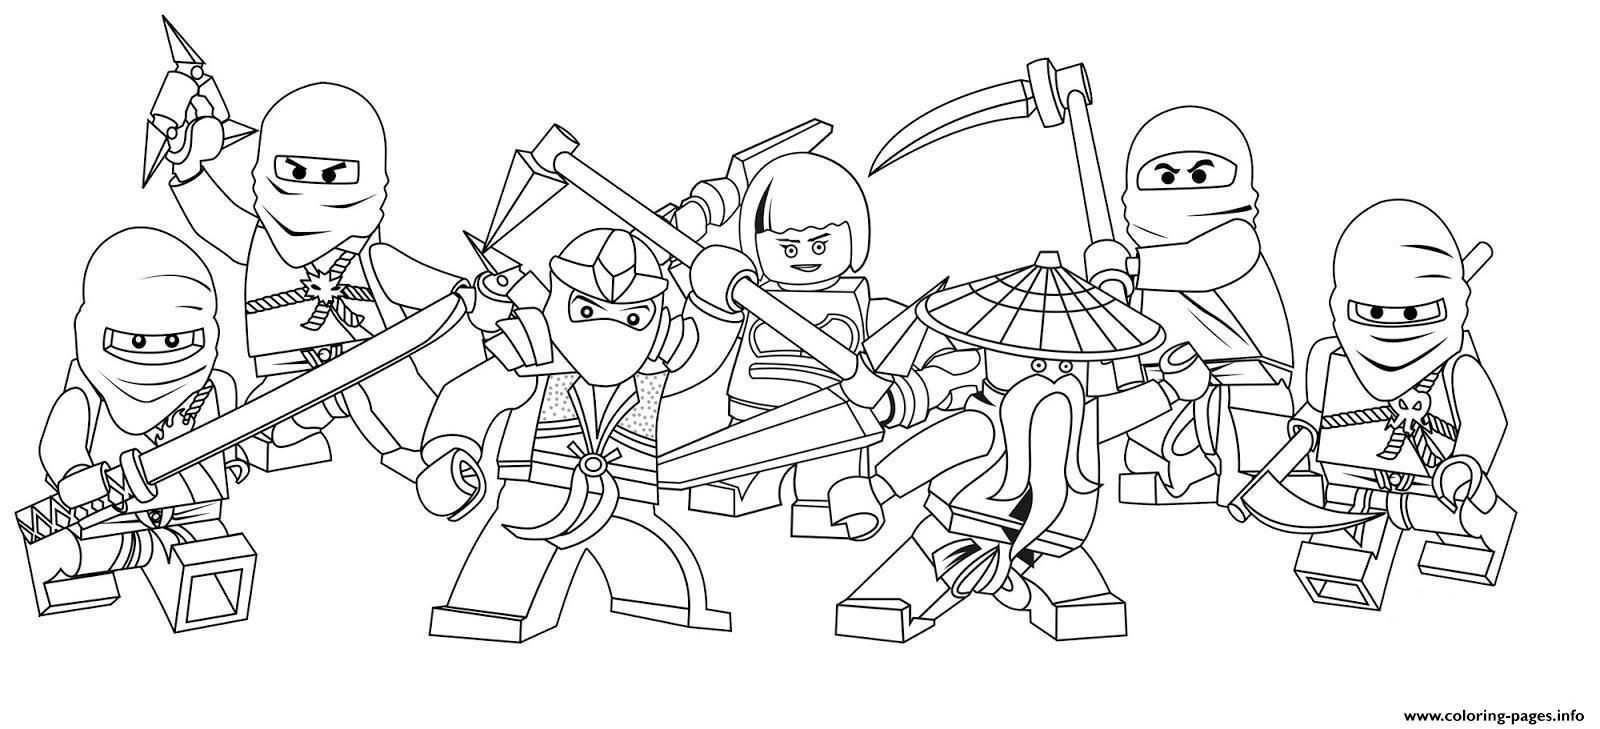 Print Characters Of Ninjago Secc8 Coloring Pages Ninjago Coloring Pages Lego Coloring